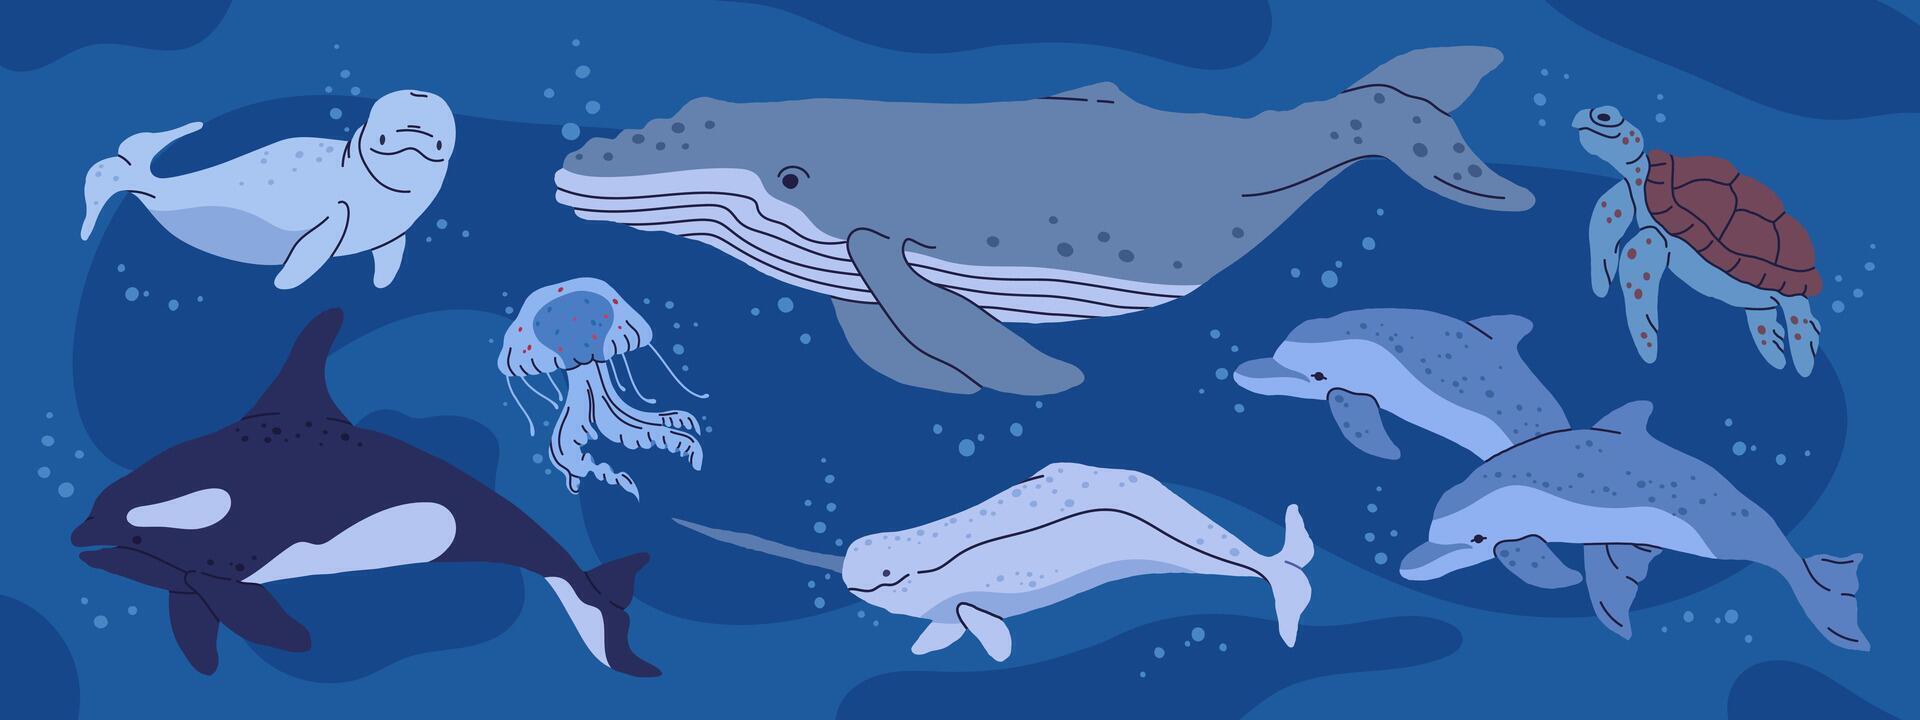 Wild ocean animals. Underwater fauna, whale, orca, turtle and jellyfish, hand drawn underwater aquatic animals flat illustration set. Antarctic nature aquatic animals collection vector